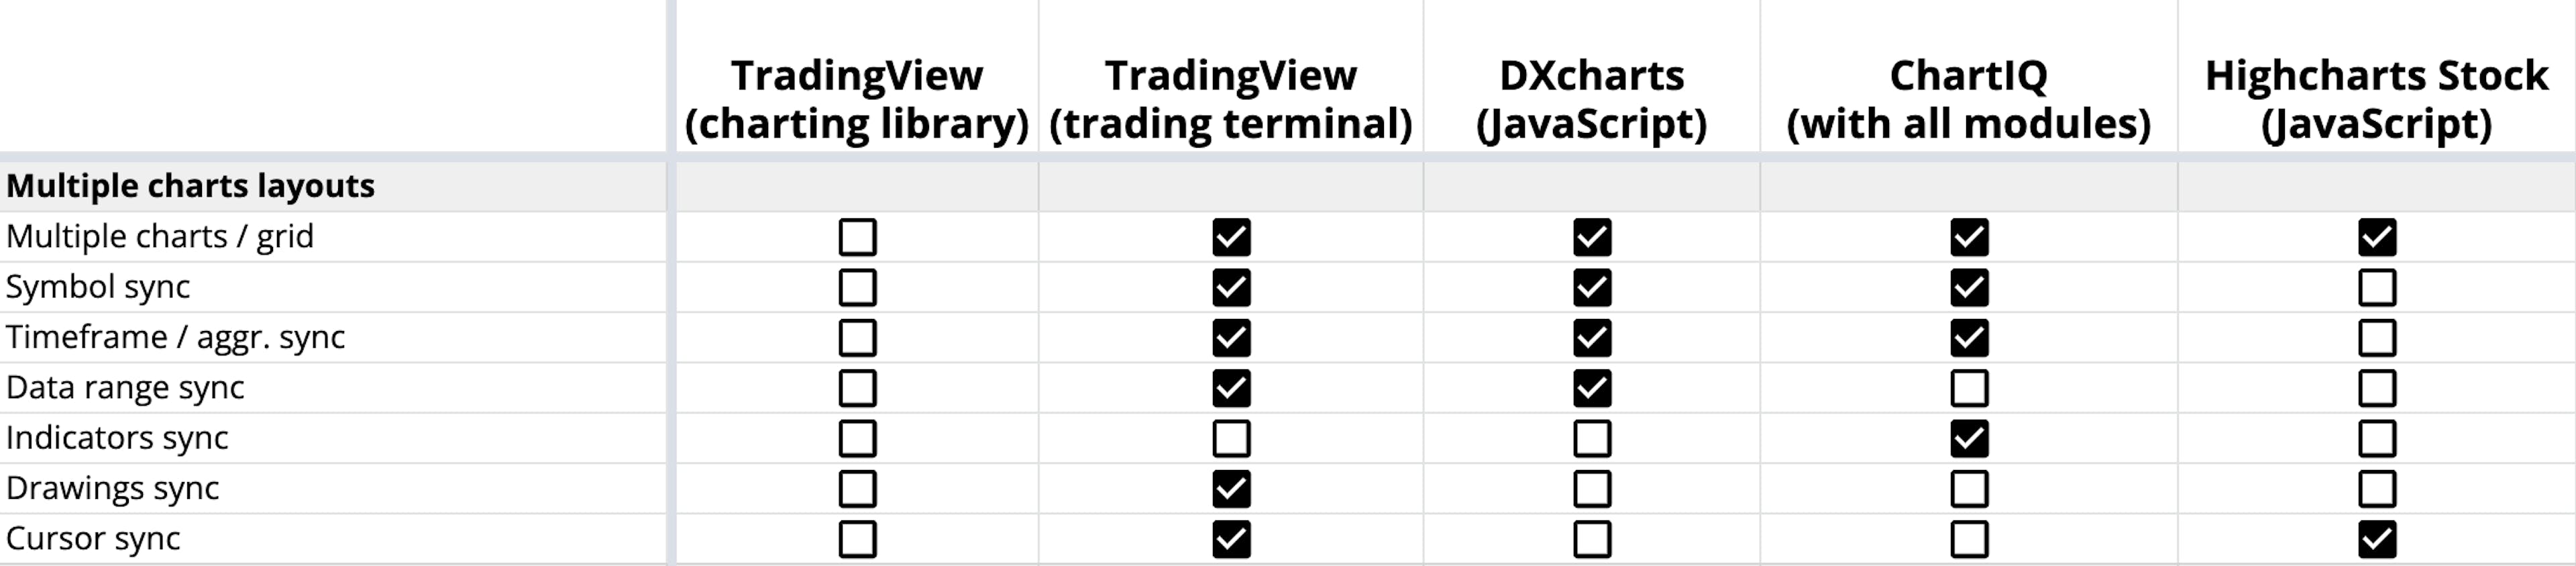 Multiple chart grid in TradingView, DXcharts, ChartIQ & Highcharts